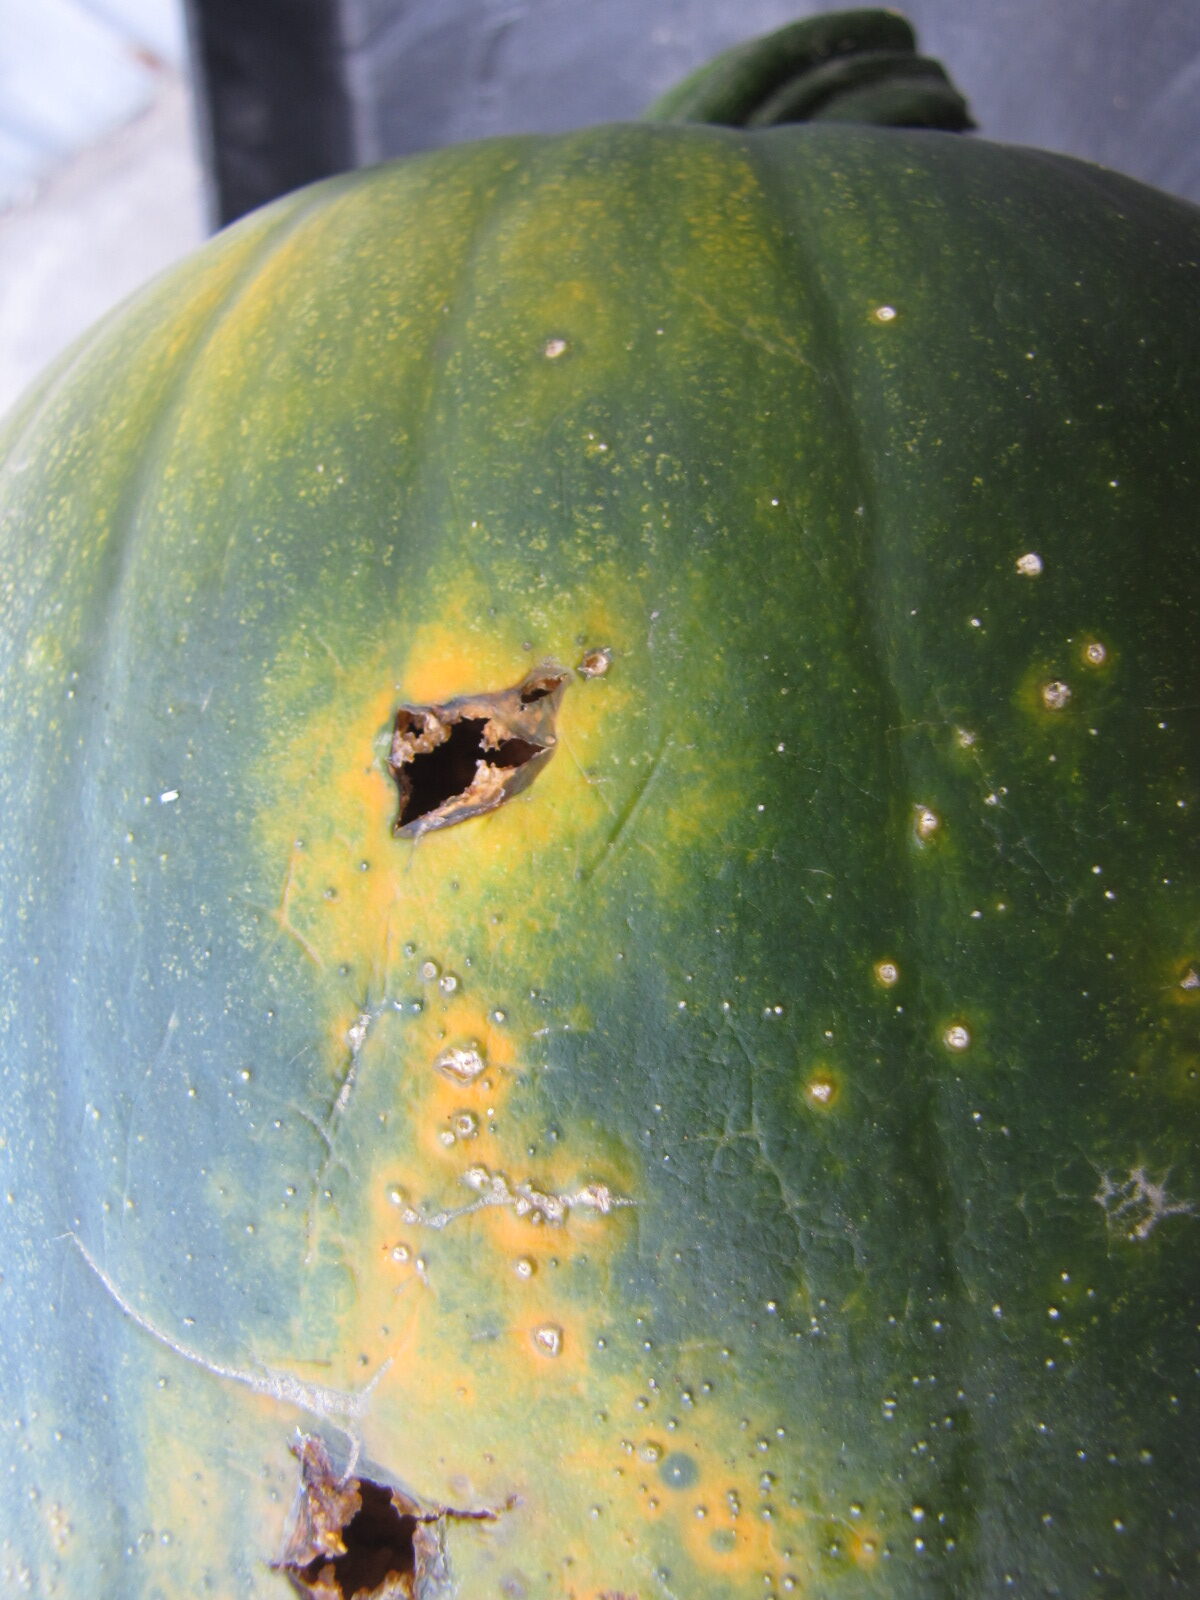  This immature pumpkin has lesions of bacterial spot of pumpkin.